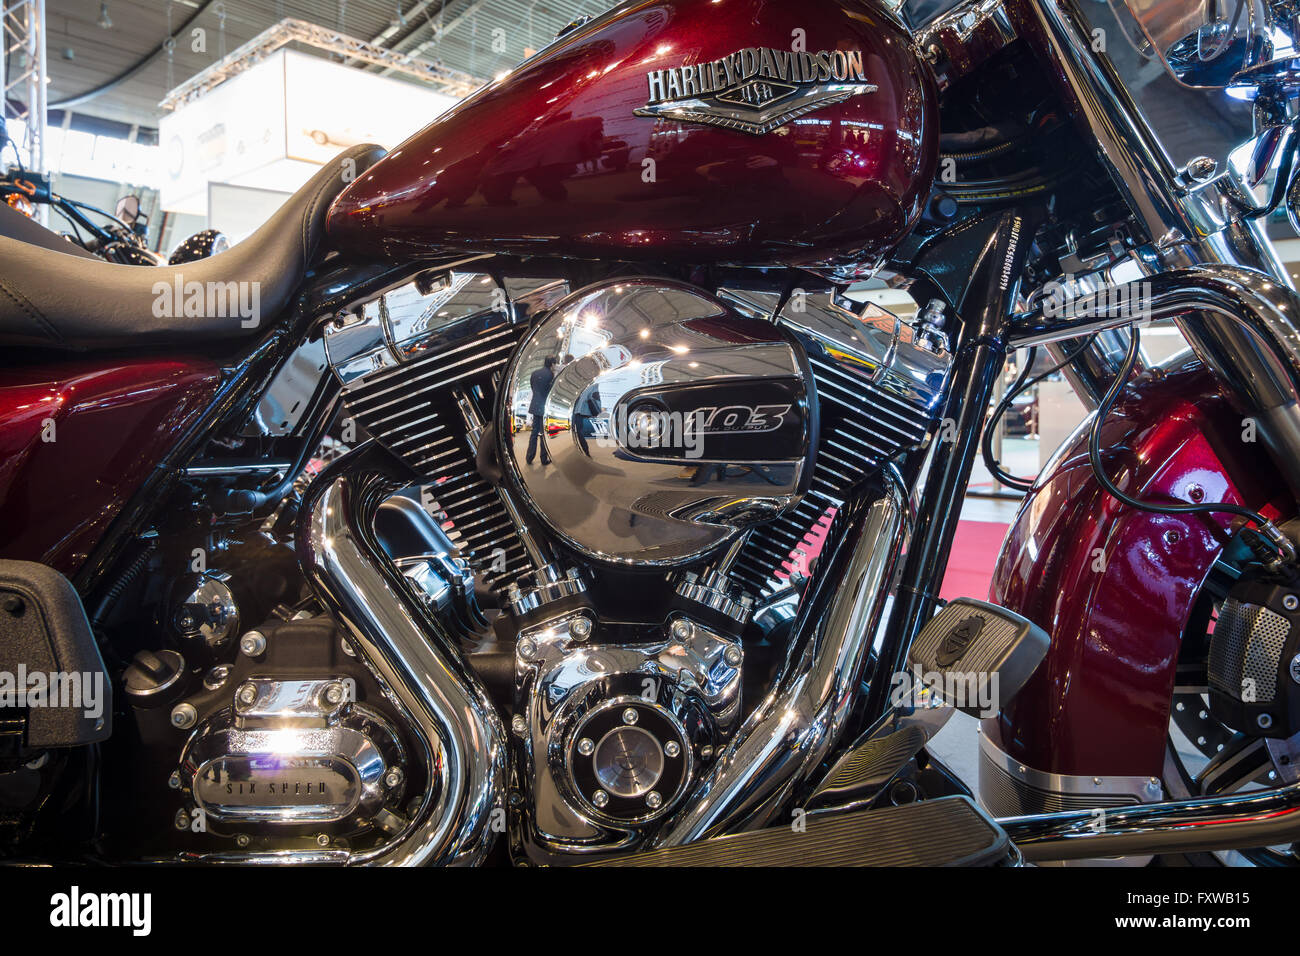 Fragment eines Motorrades Harley-Davidson Road King, 2016. Stockfoto